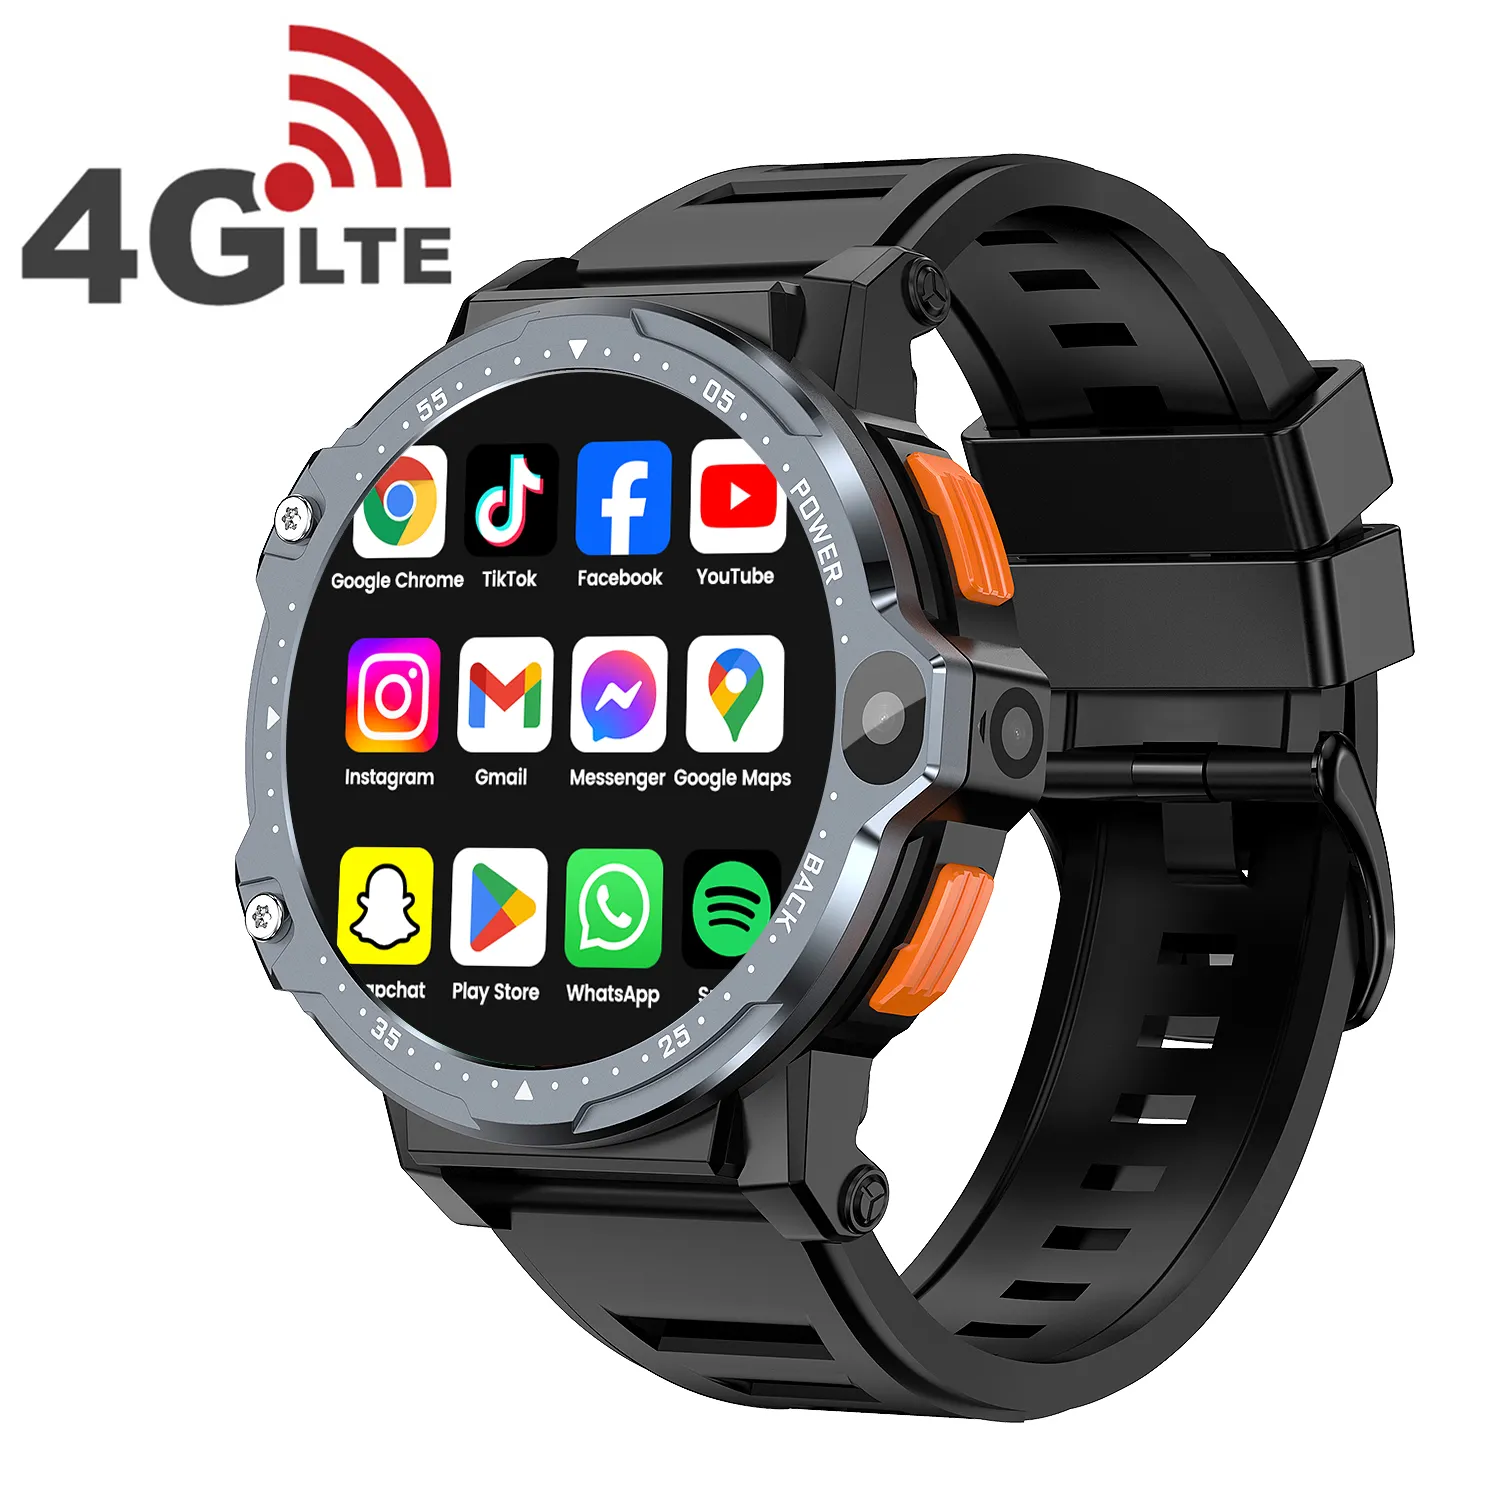 VALDUS 4G Android Smart Watch RAM 2GB ROM 16GB Sim Card GPS WIFI Dual Video Camera PG999 Round Phone Mobile Smartwatch